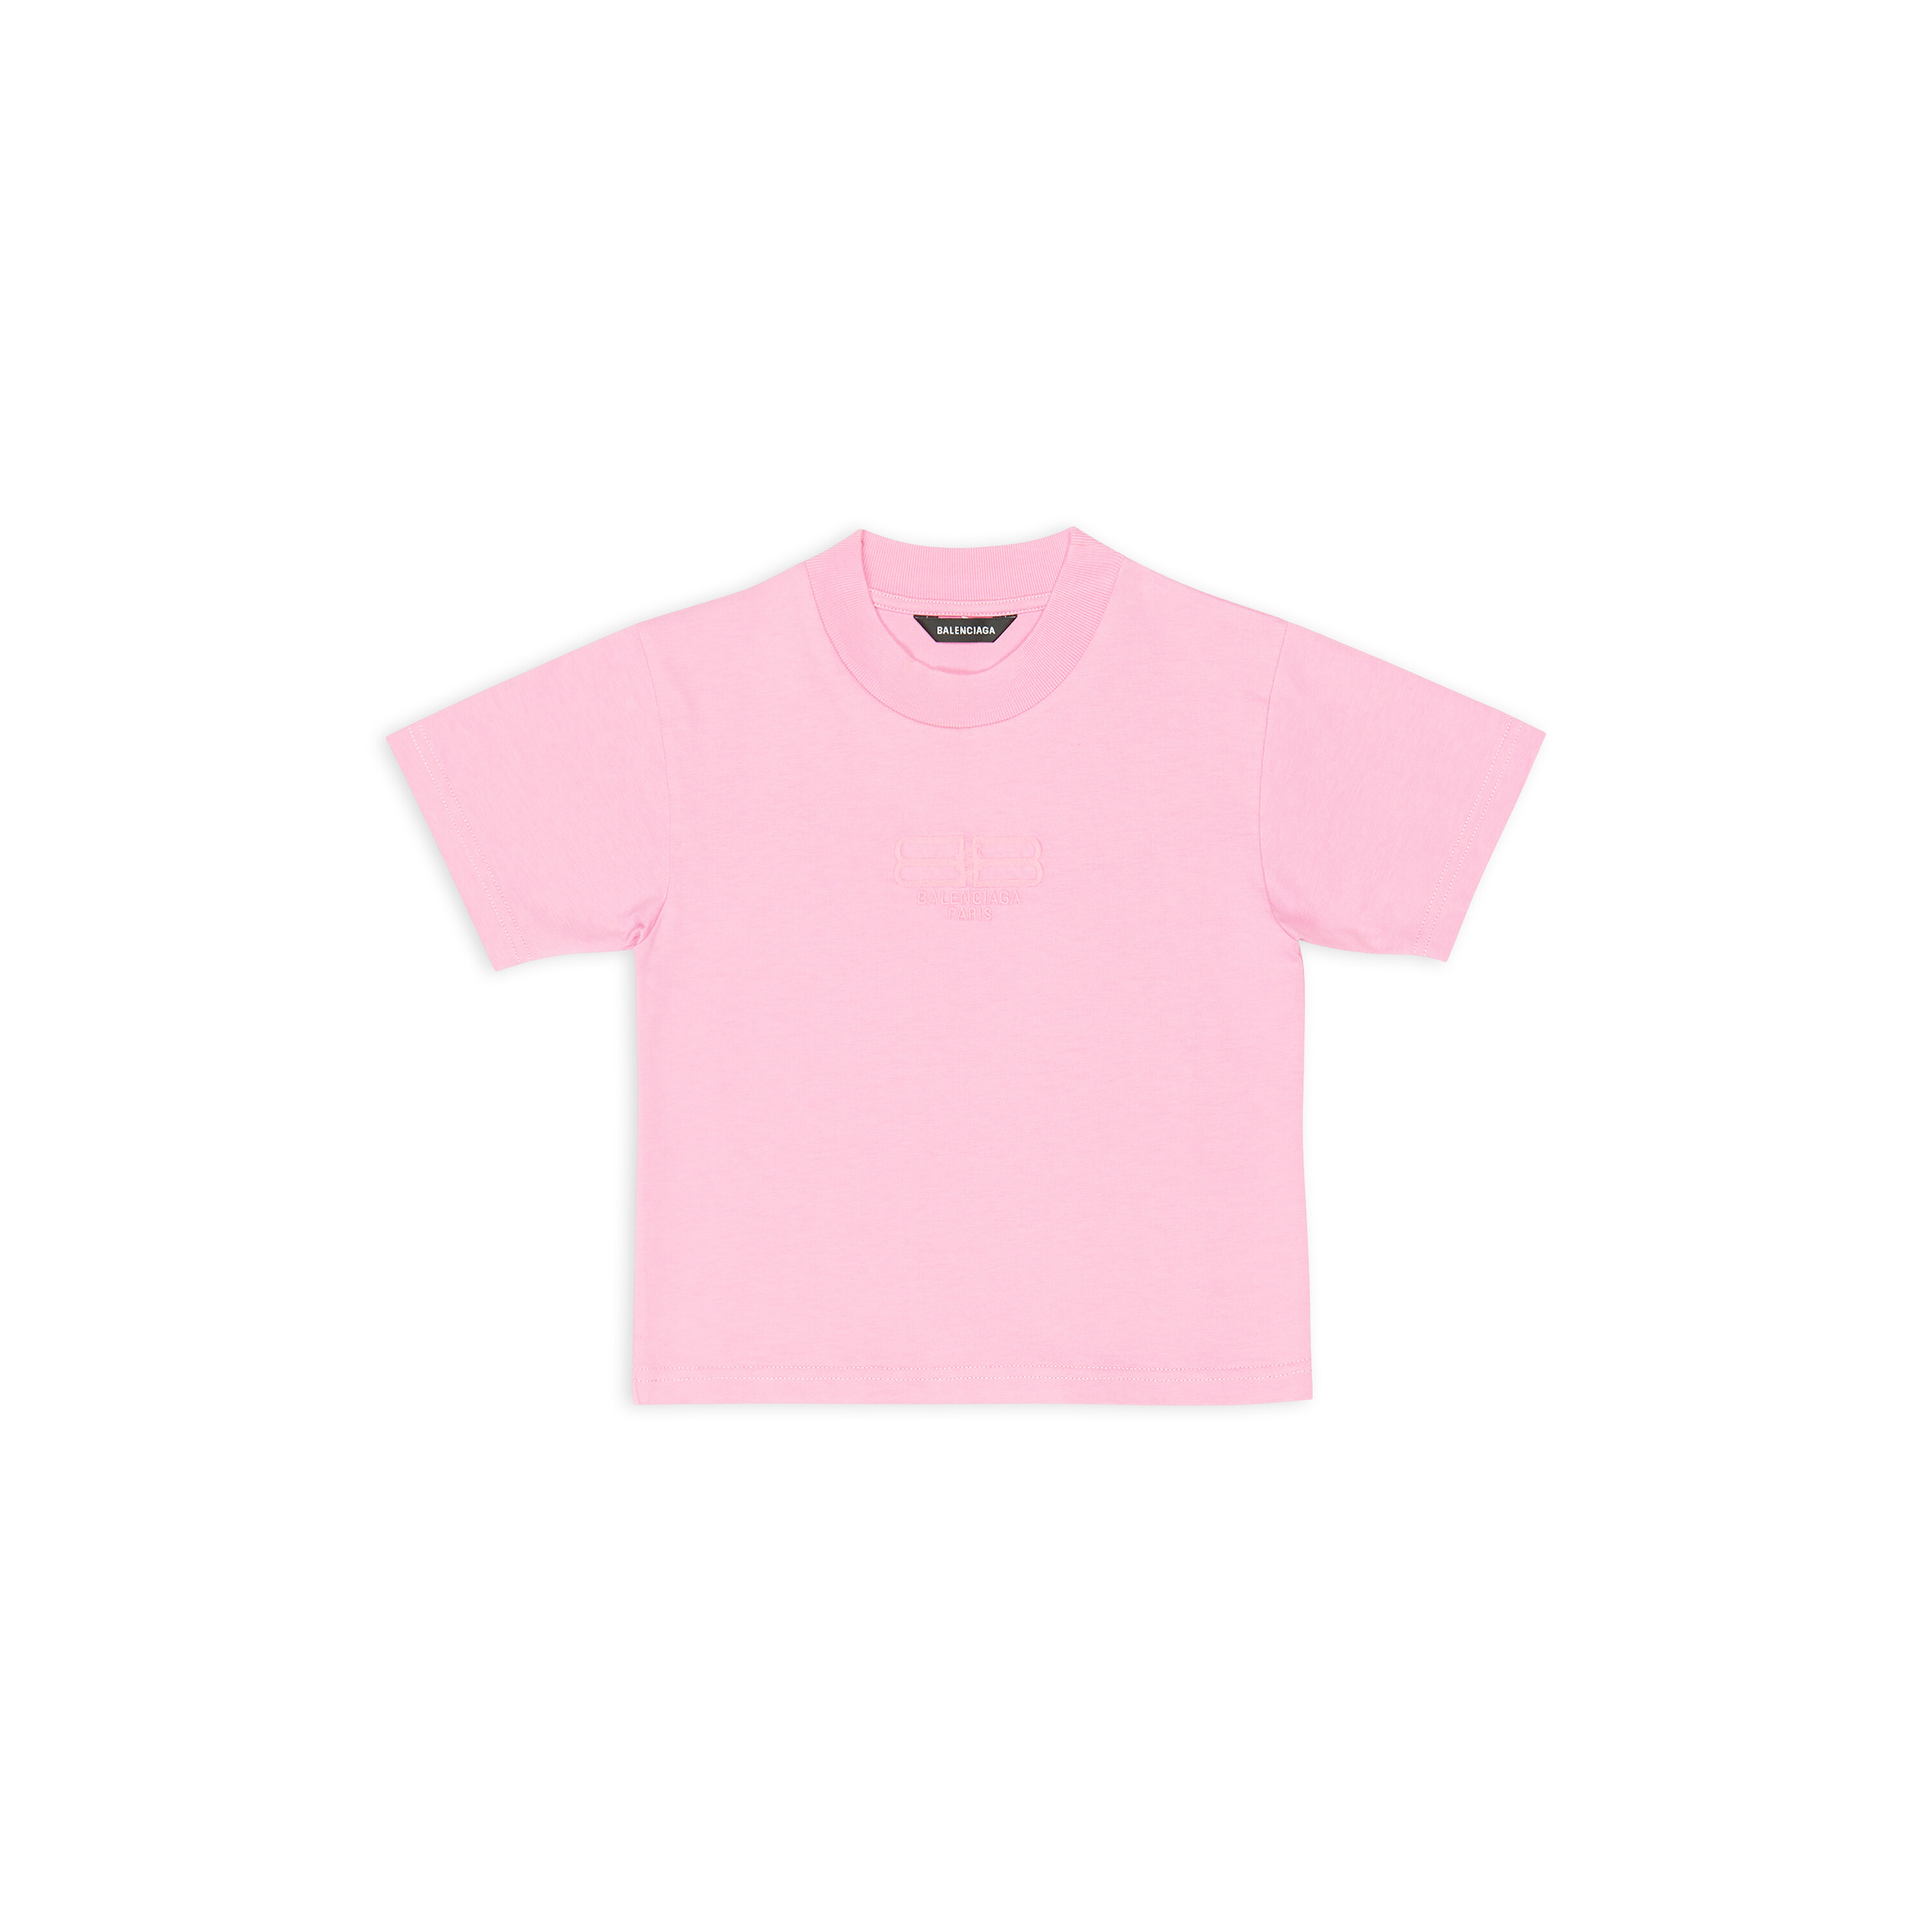 balenciaga shirt pink biggest sale Hit A 60 Discount  wwwhumumssedubo